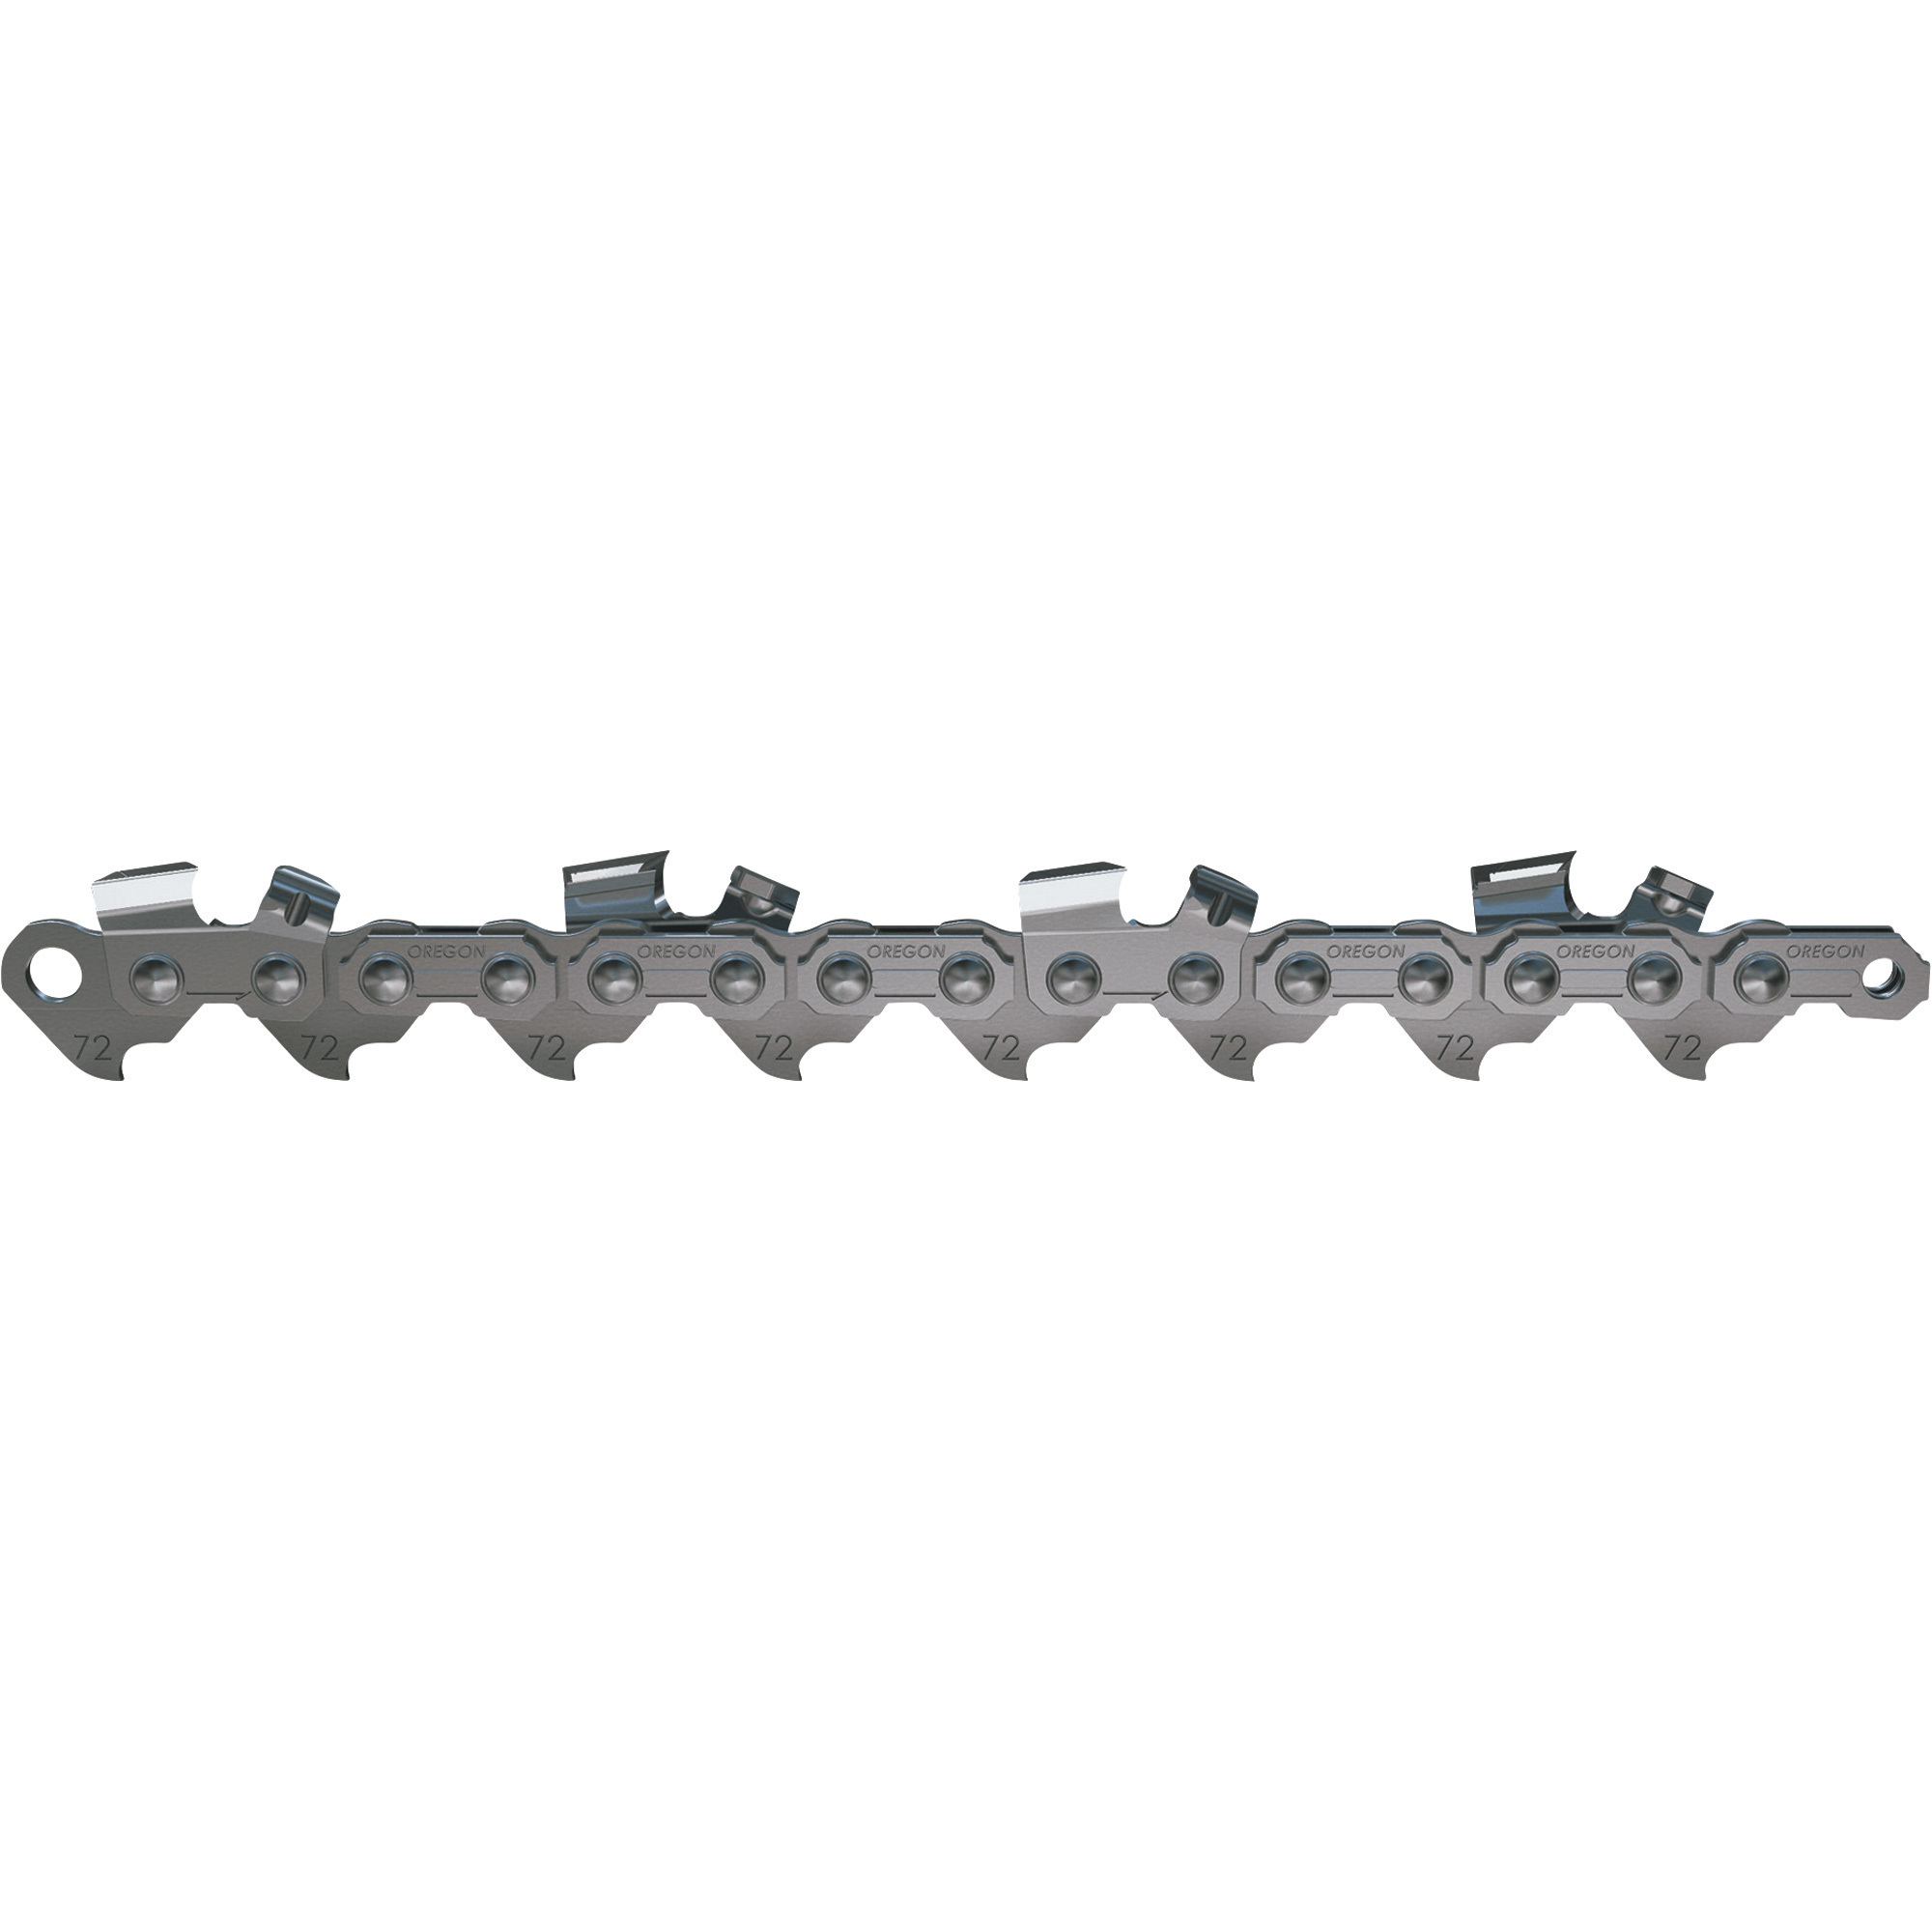 Oregon Low Kickback Chainsaw Chain, 3/8Inch x 0.050Inch, Fits 18Inch Bar, Model D66/72V066G